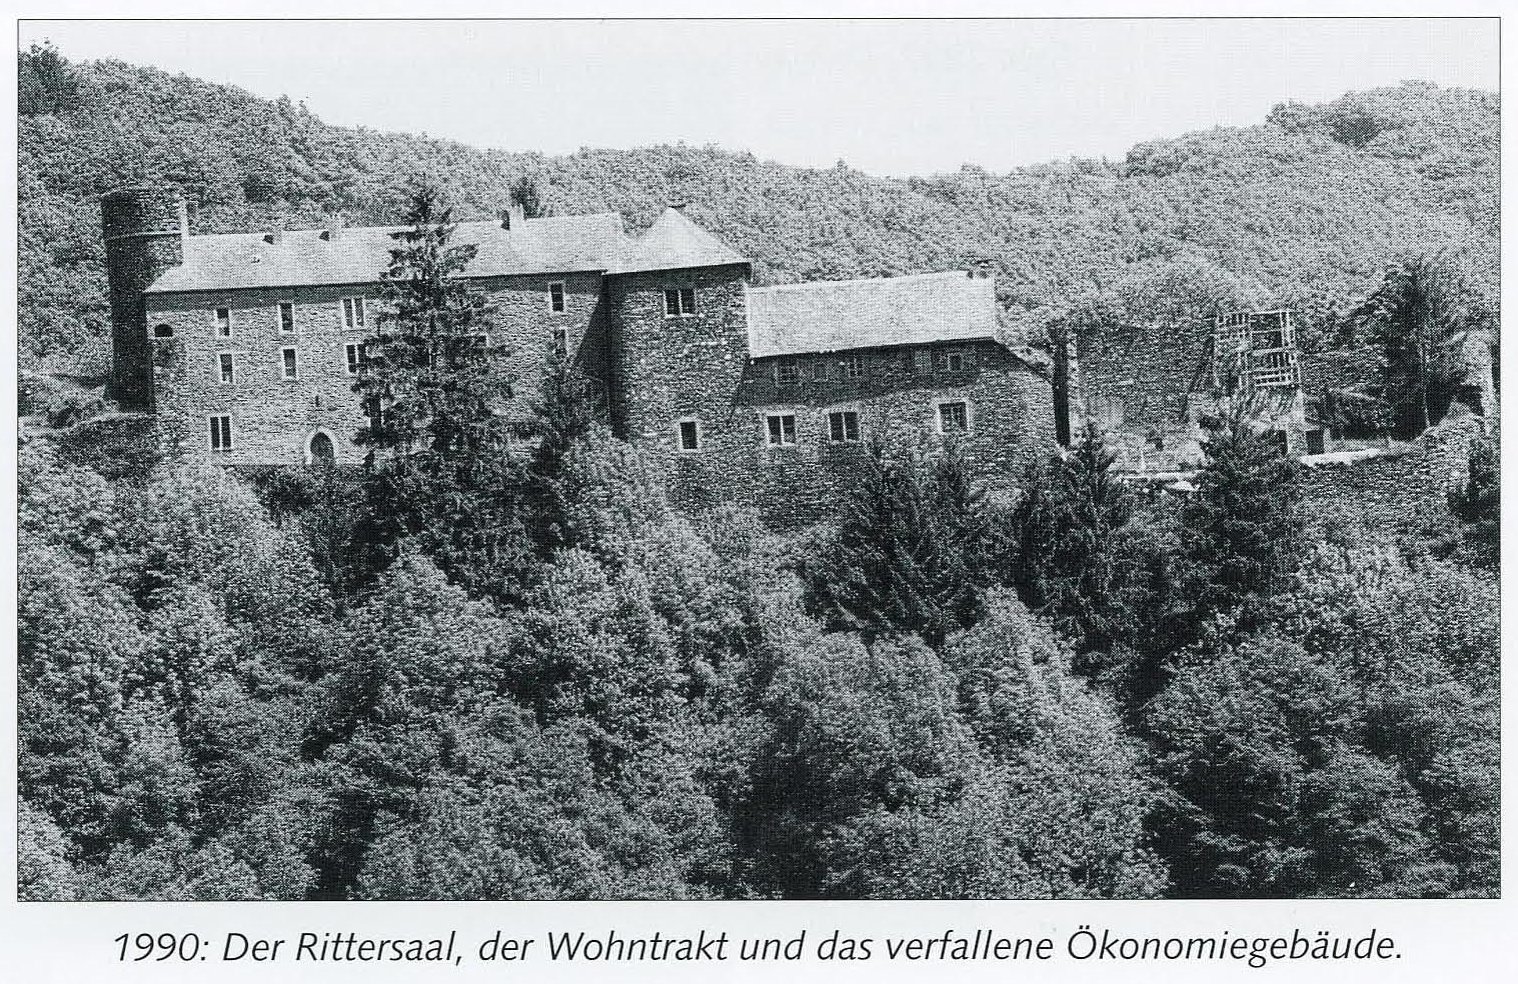 Schuttbourg view, 1973